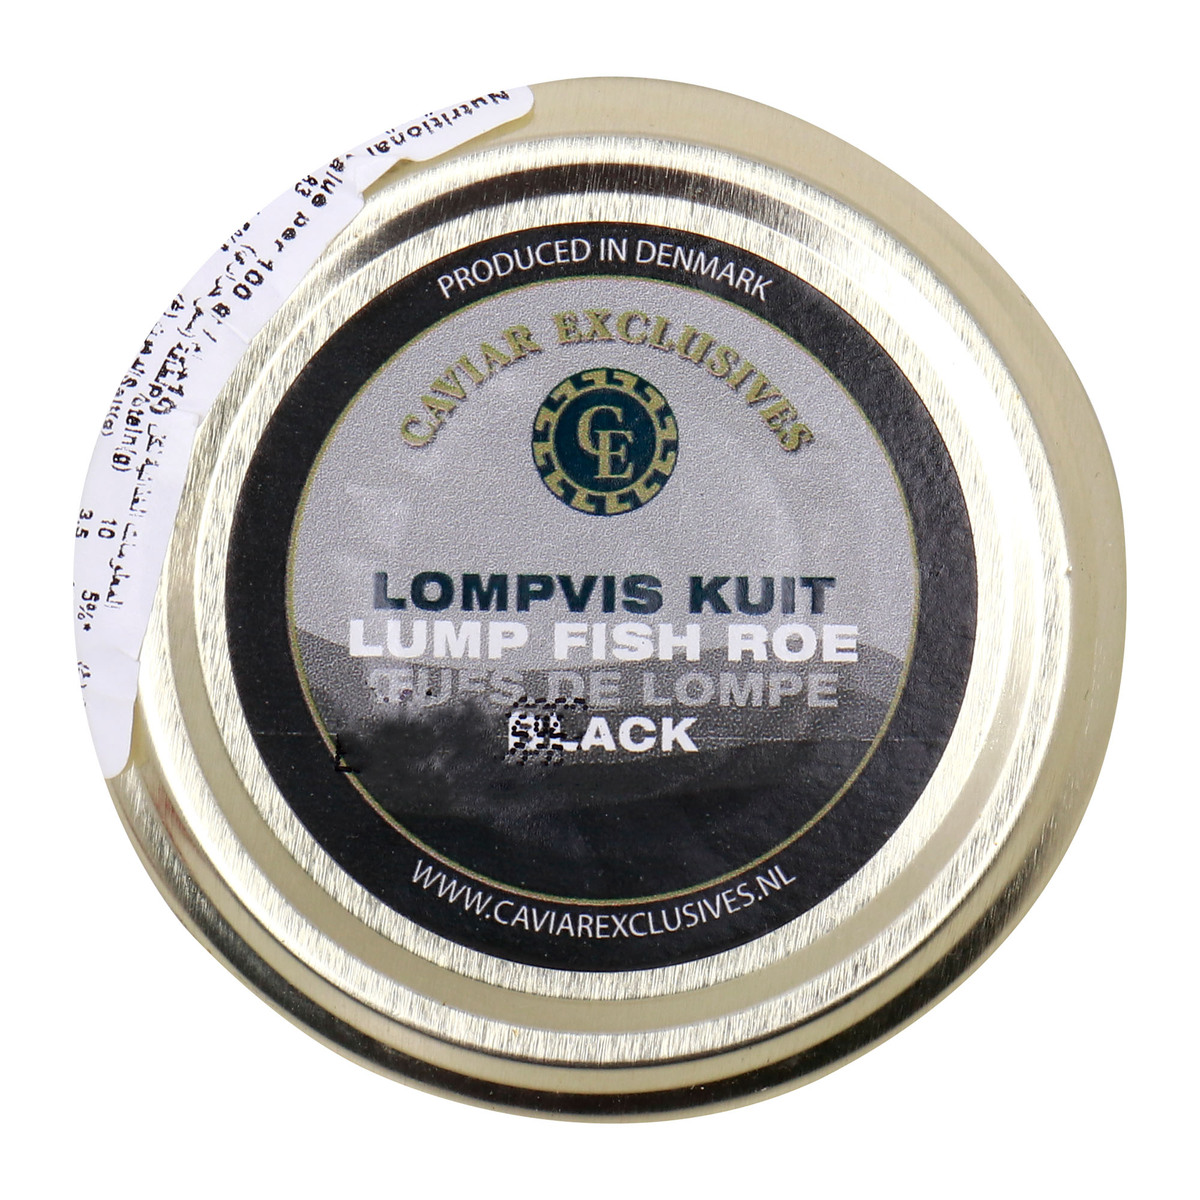 Caviar Exclusives Lump Fish Roe Black 50 g